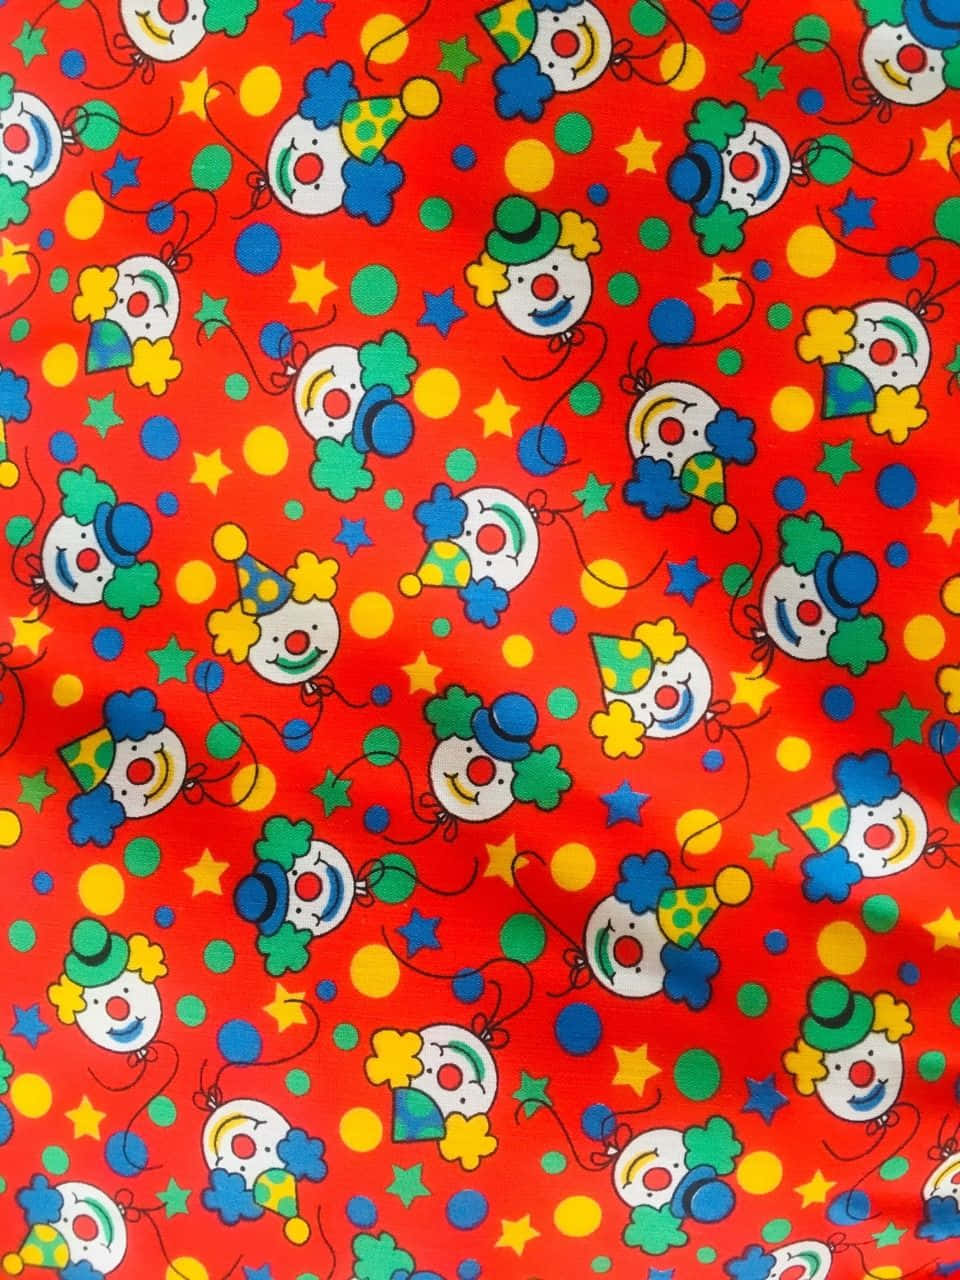 Colorful Clown Pattern Fabric.jpg Wallpaper